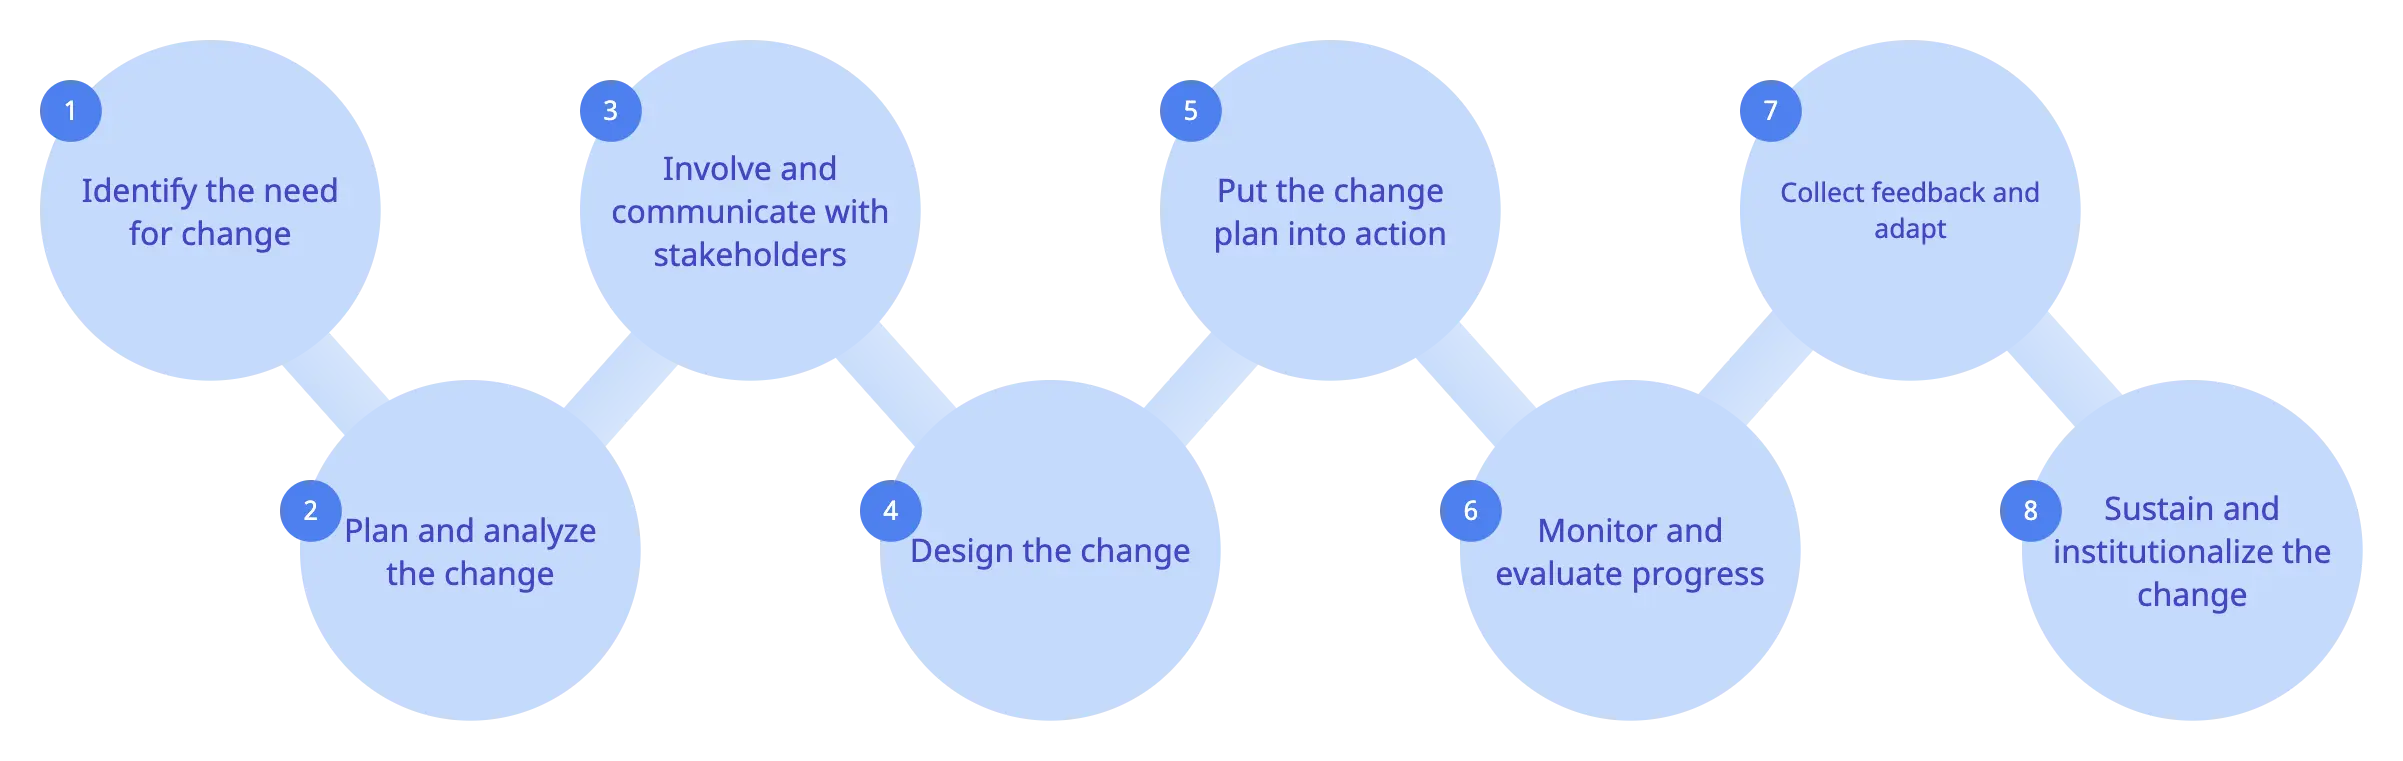 Change Management Process Steps